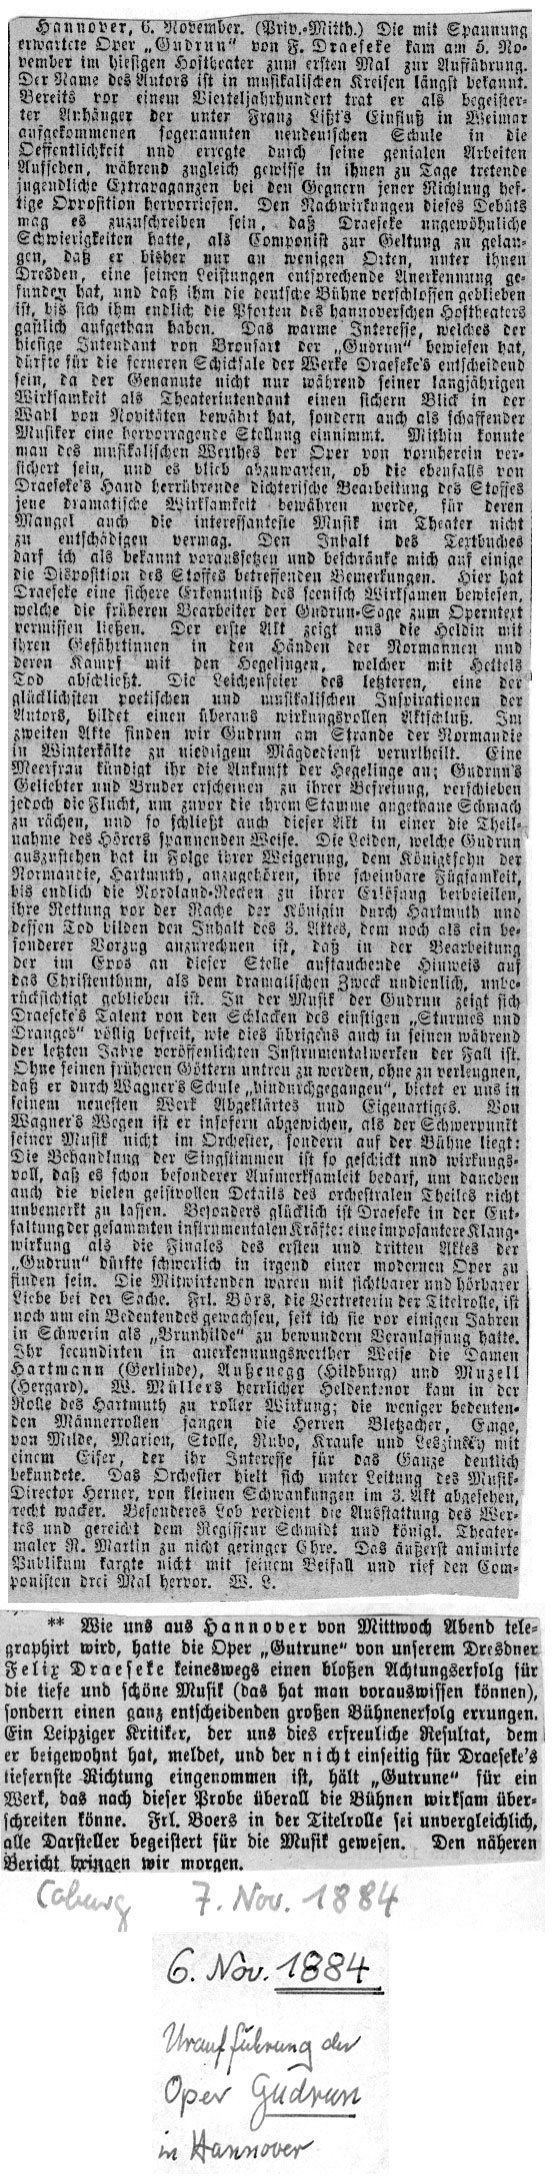 Review of Gudrun premiere, Coburger Zeitung (6/7 Nov 1884)